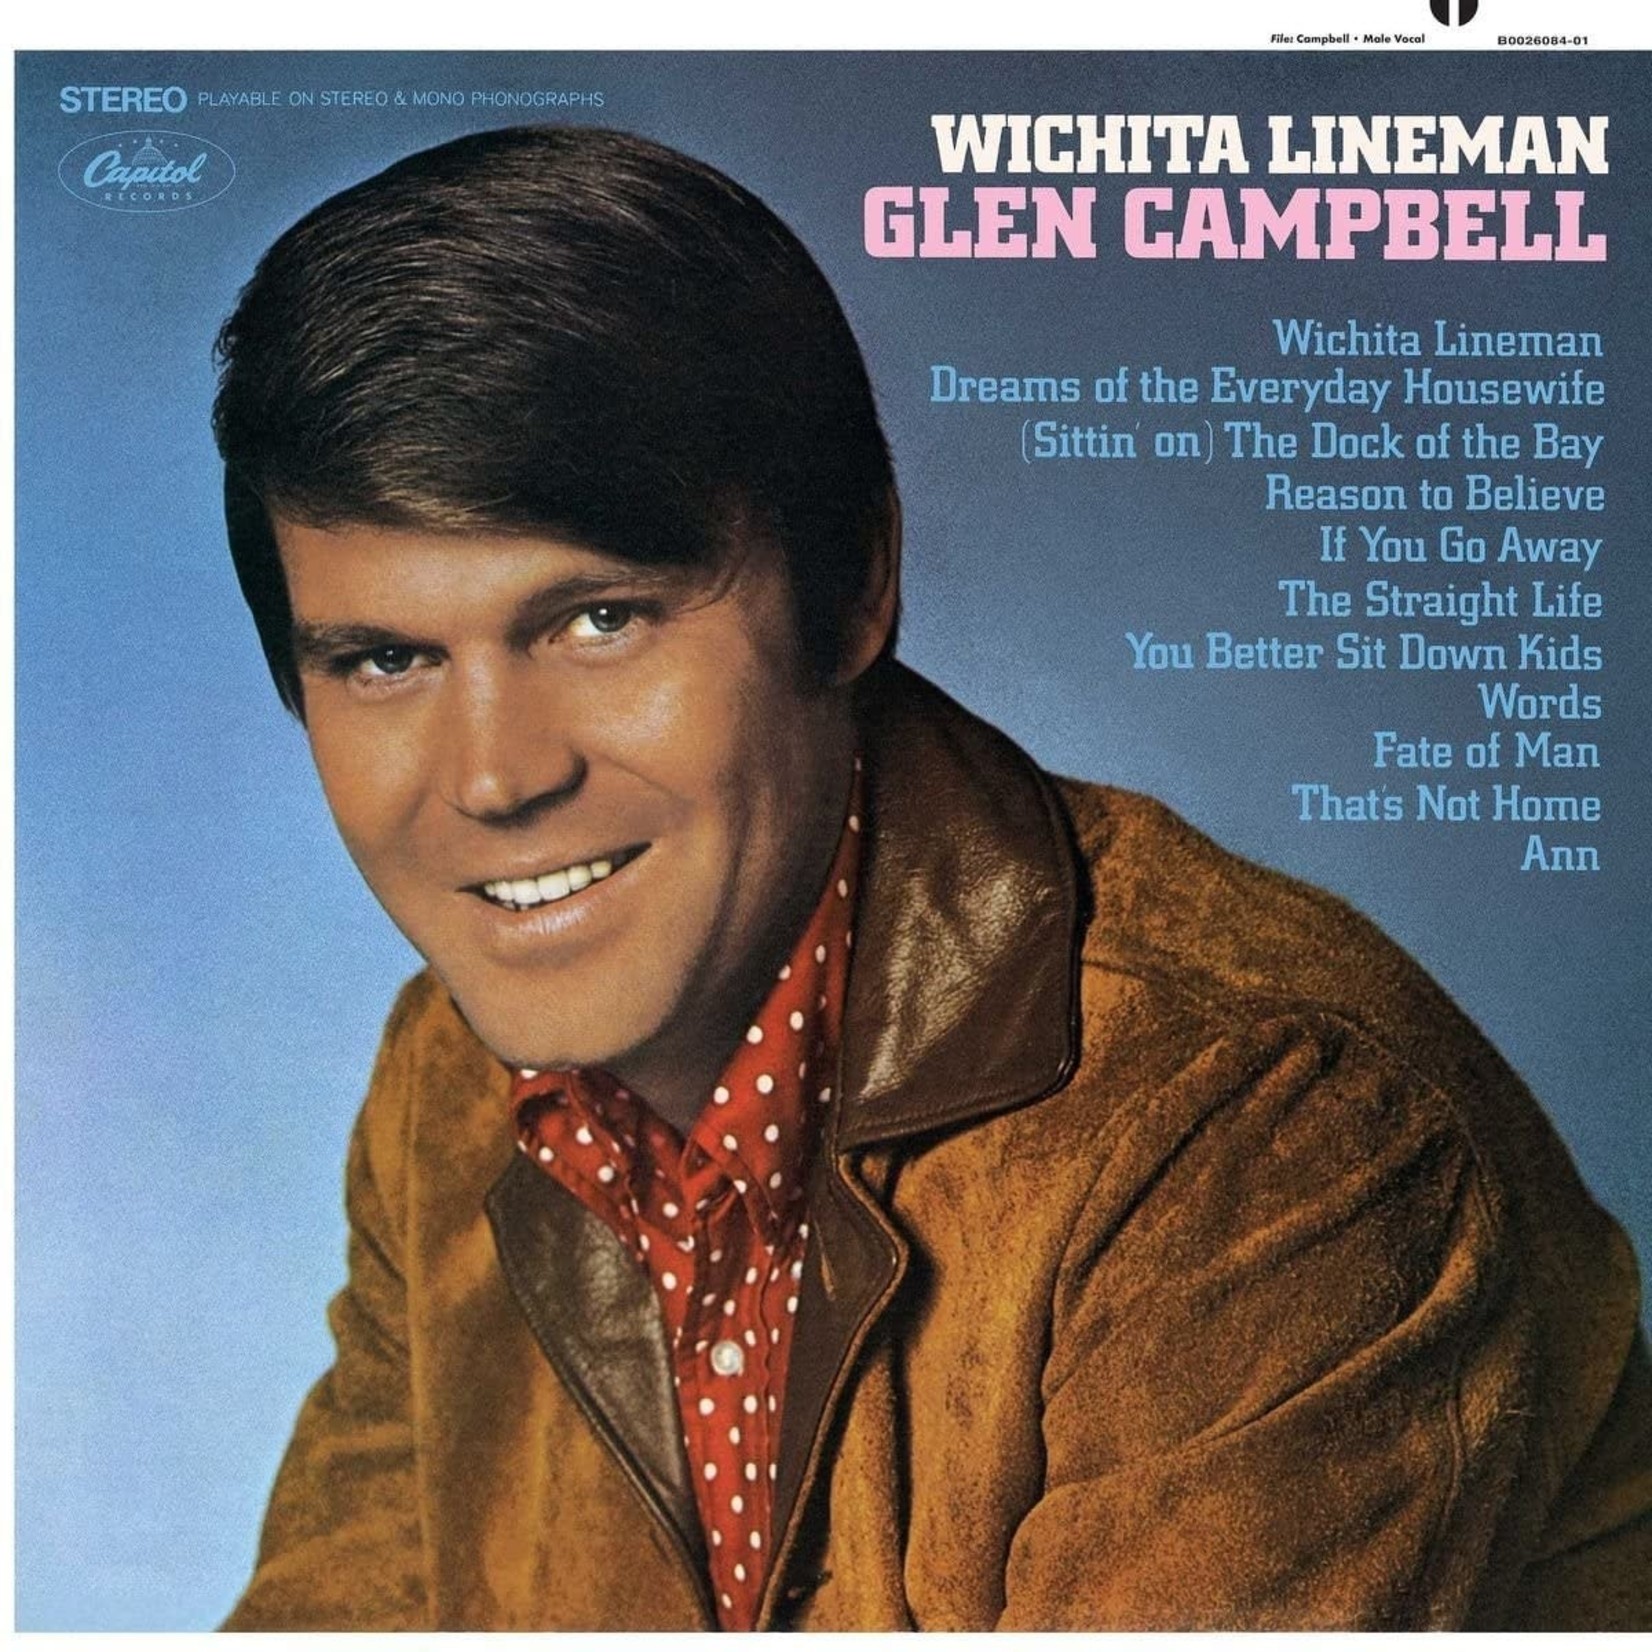 [Vintage] Glen Campbell - Wichita Lineman